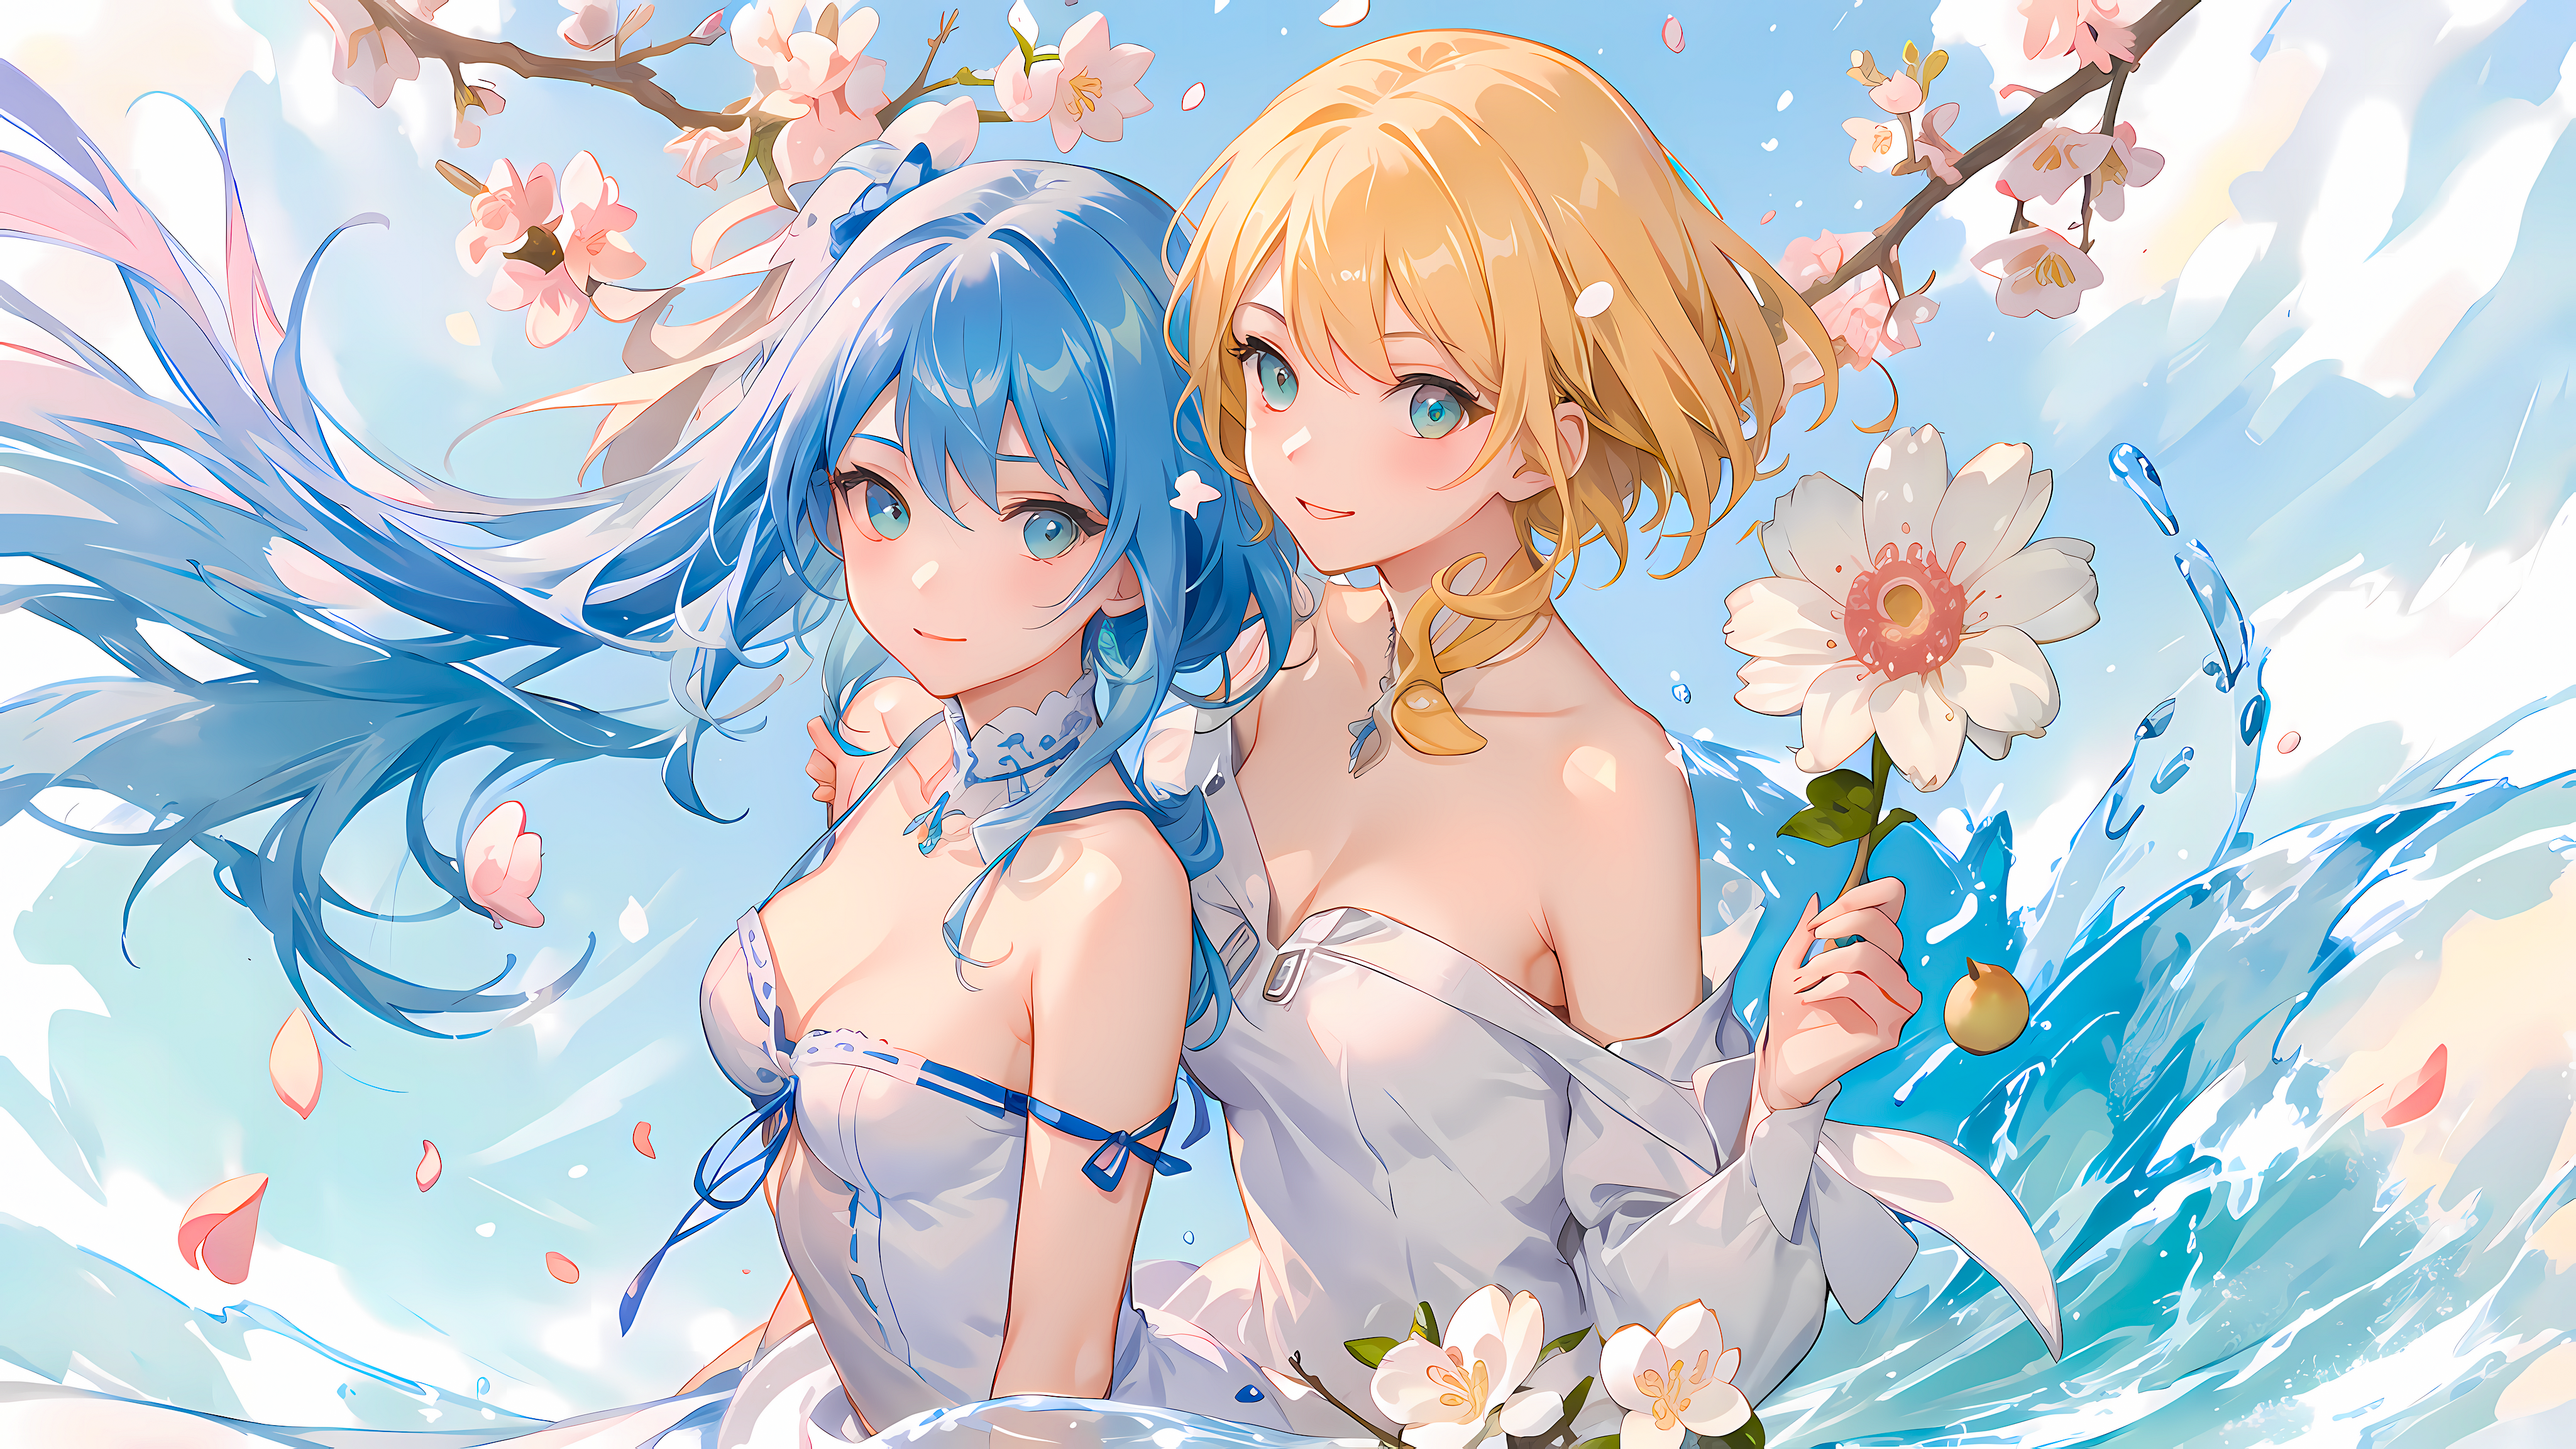 Ai Art Blue Hair Flower In Hair Skirt Plum Blossom Anime Girls Water Petals Flowers Smiling Long Hai 4098x2305